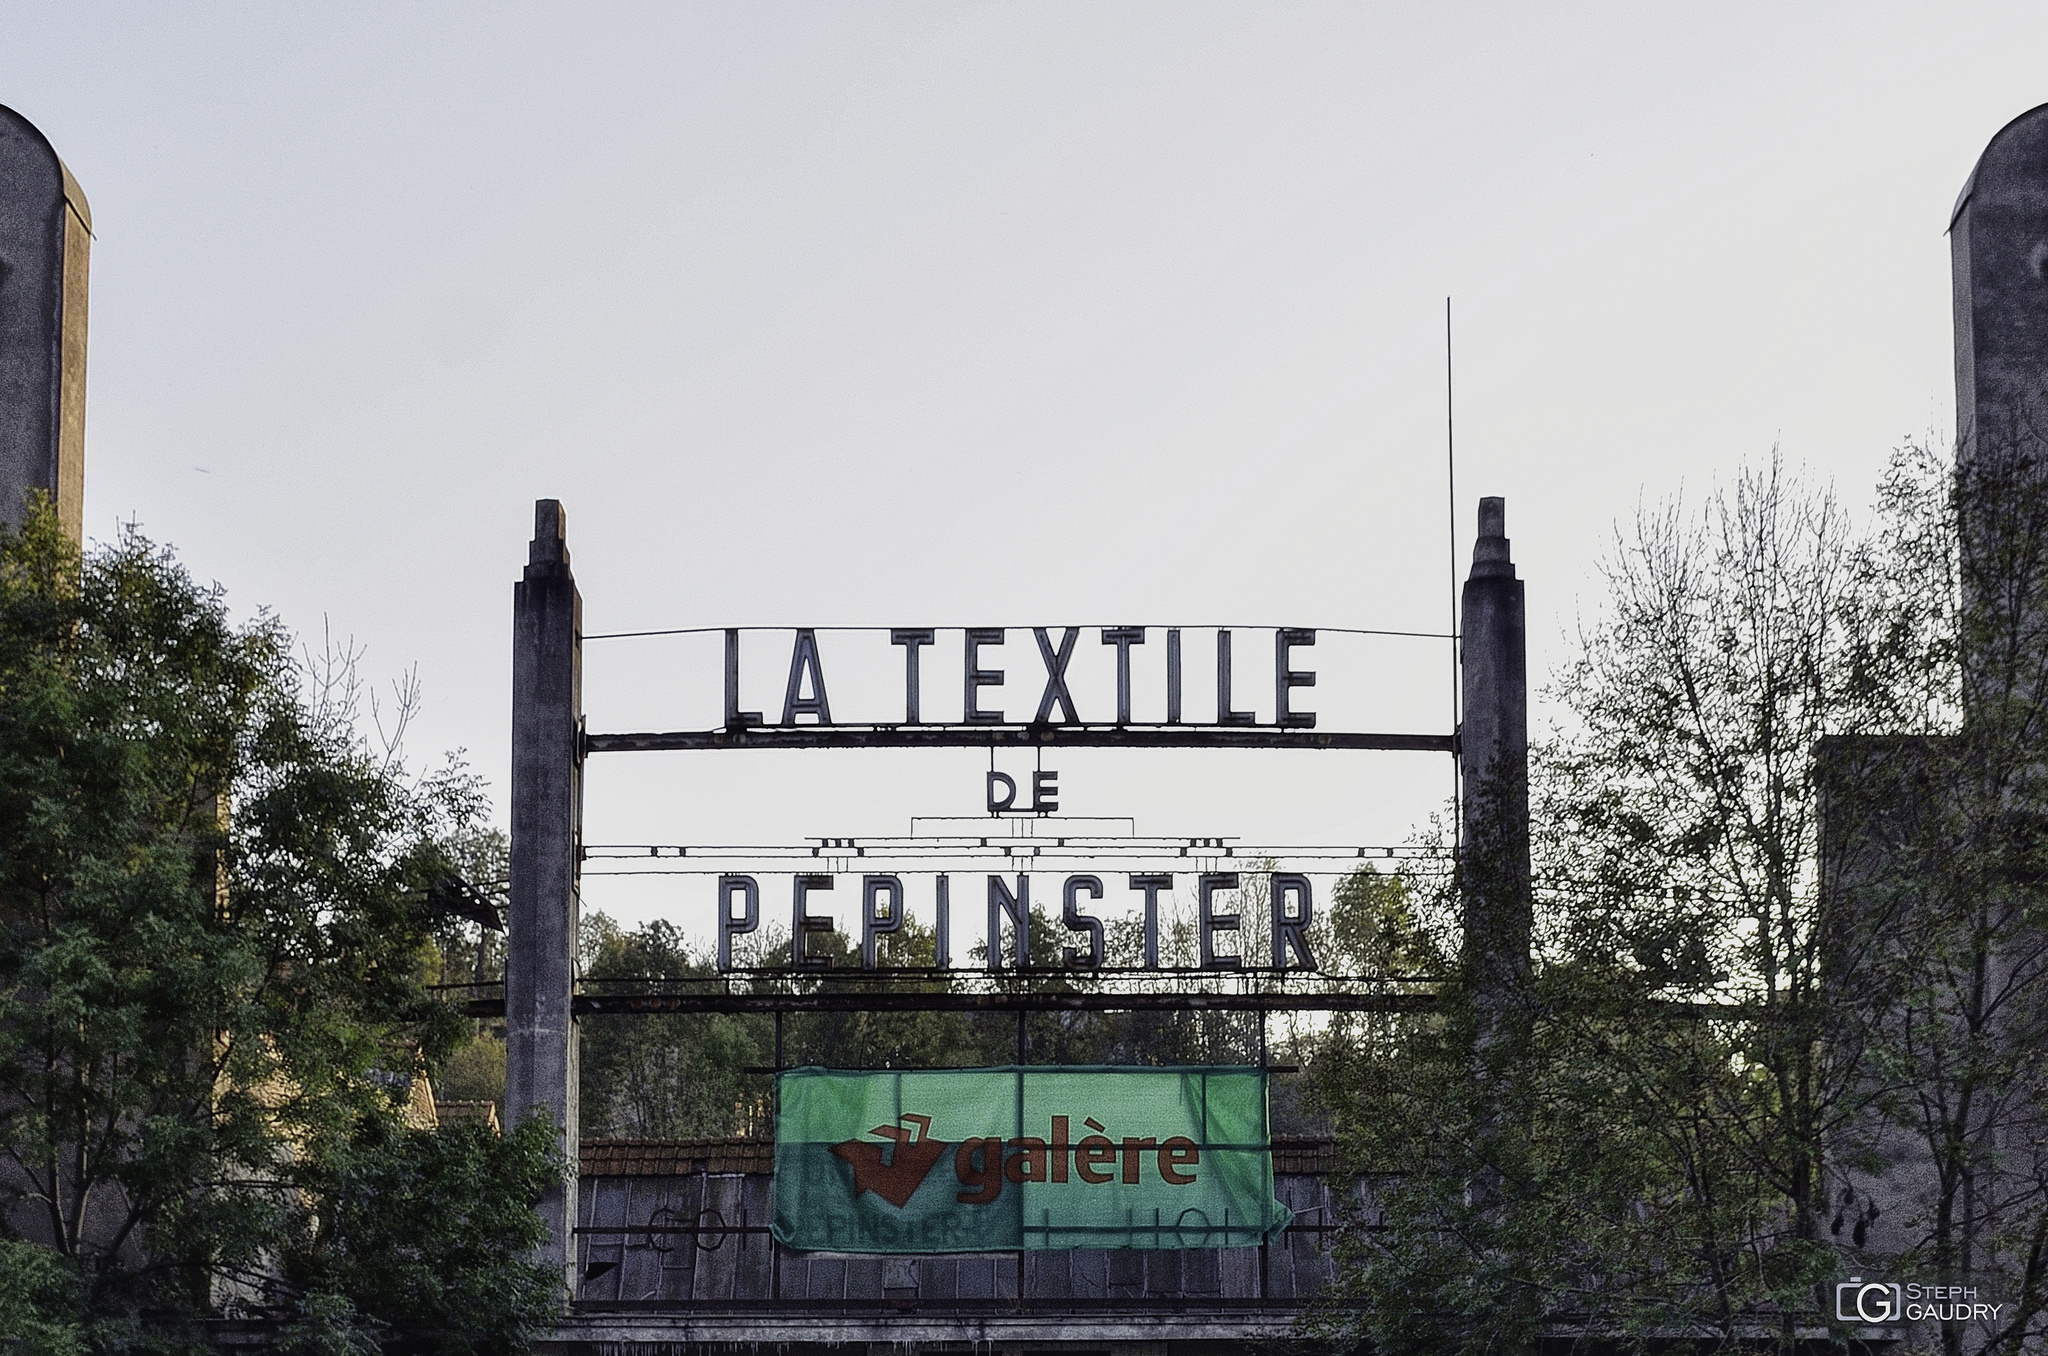 La textile de Pepinster [Click to start slideshow]